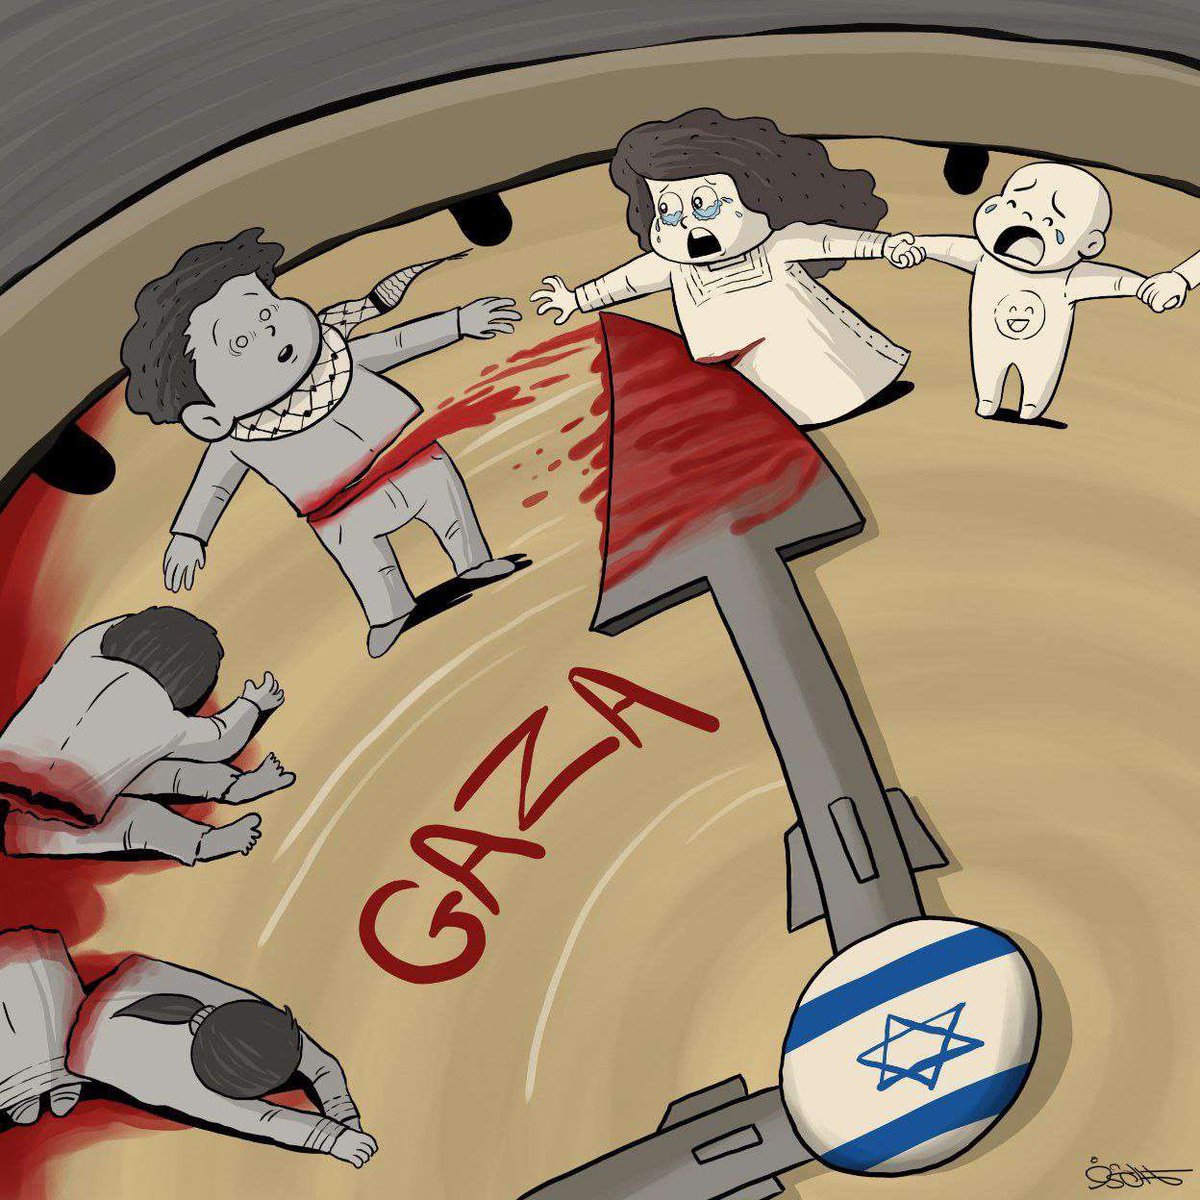 Gaza's children are being killed around the clock